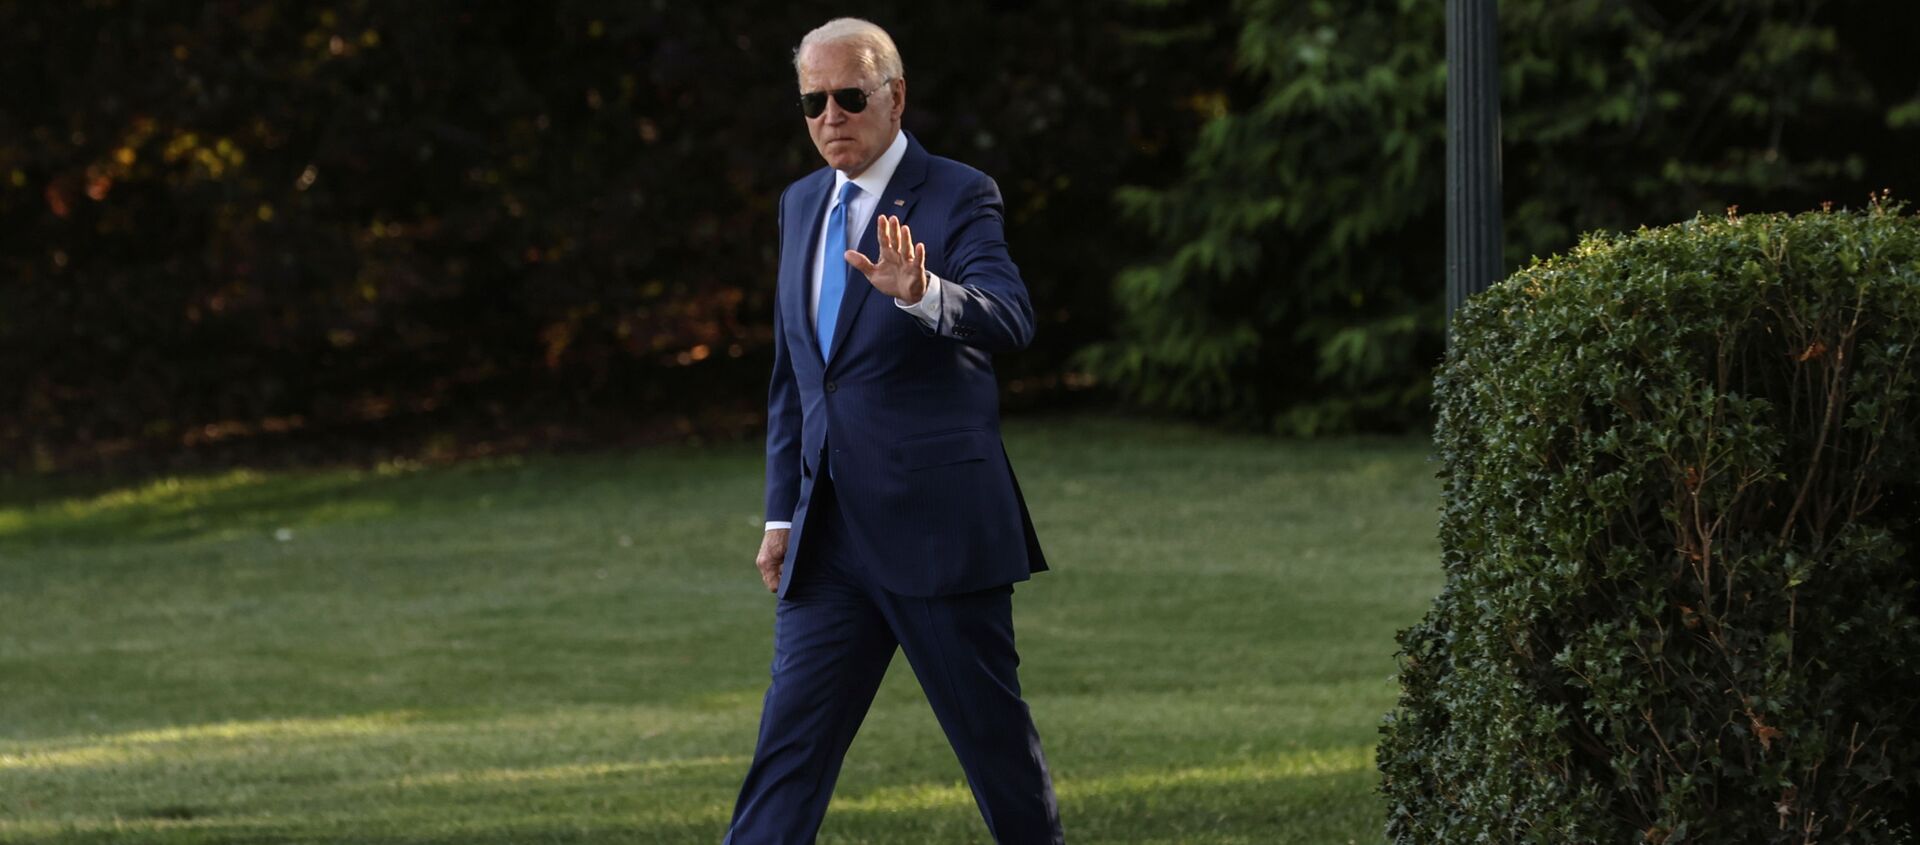 U.S. President Joe Biden waves as he walks to board the Marine One helicopter to depart for Camp David from the White House in Washington, U.S. June 25, 2021. - Sputnik International, 1920, 27.06.2021